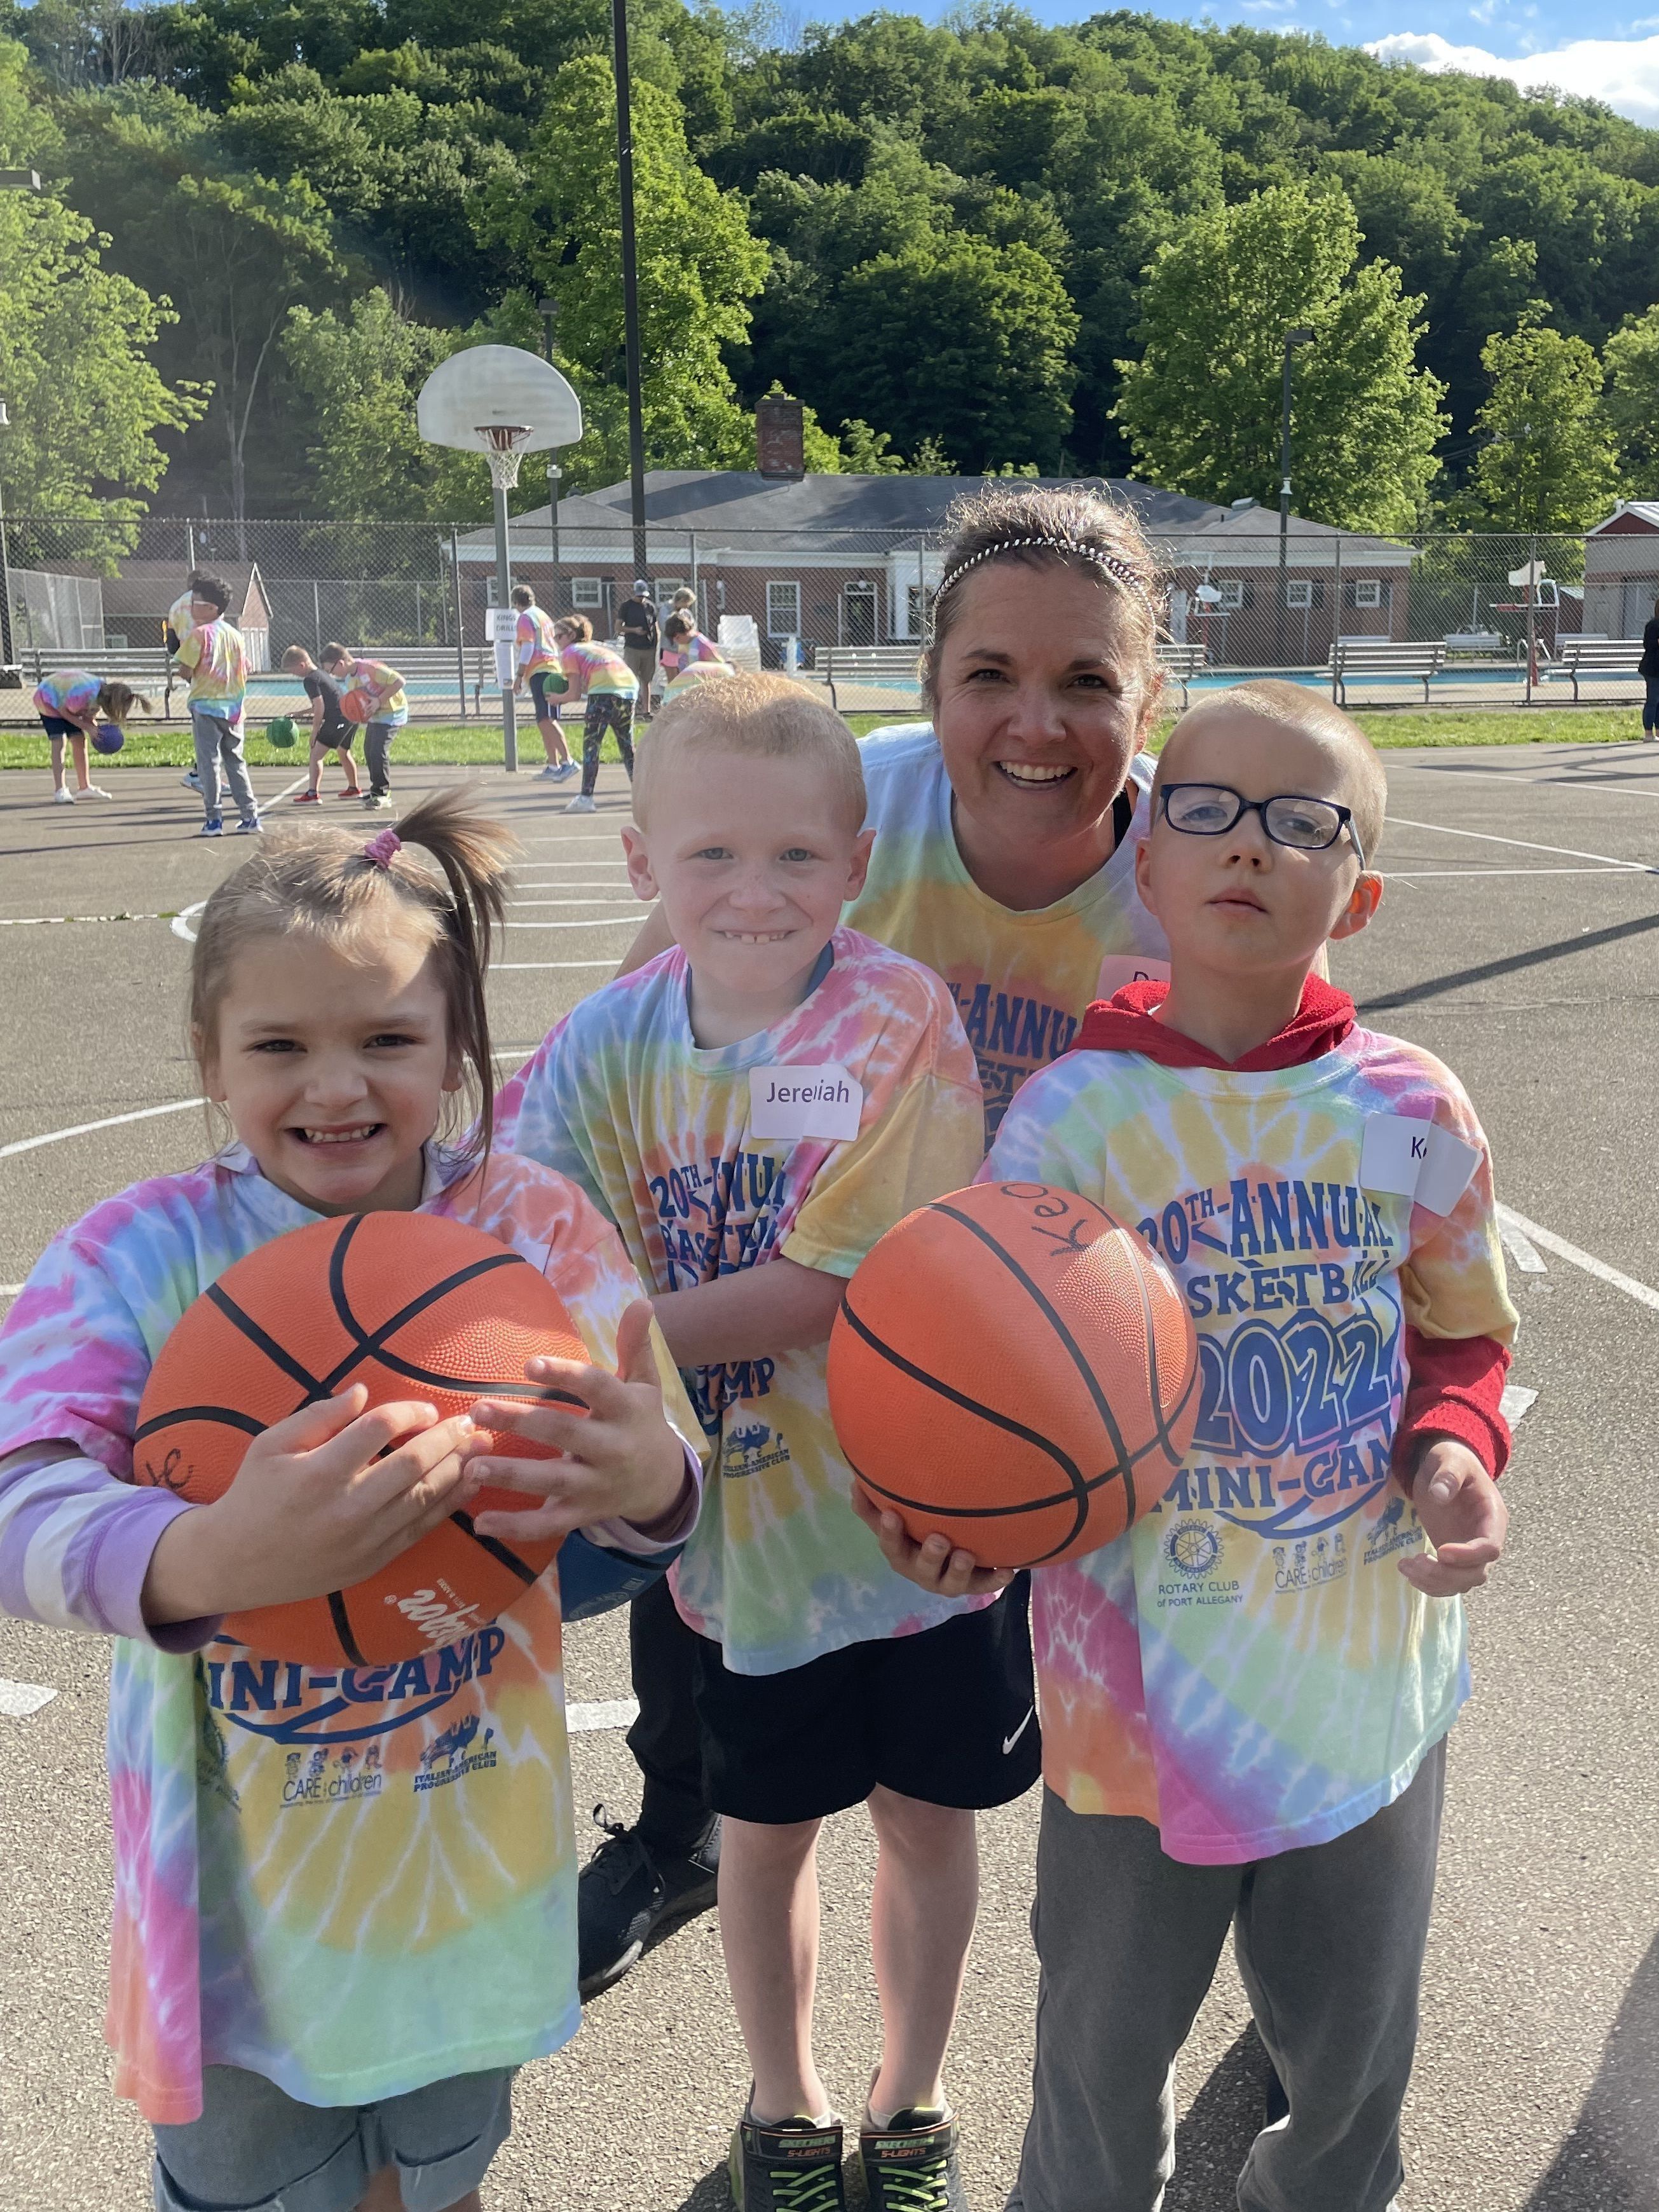 Basketball Mini Camp Group of 3 Children